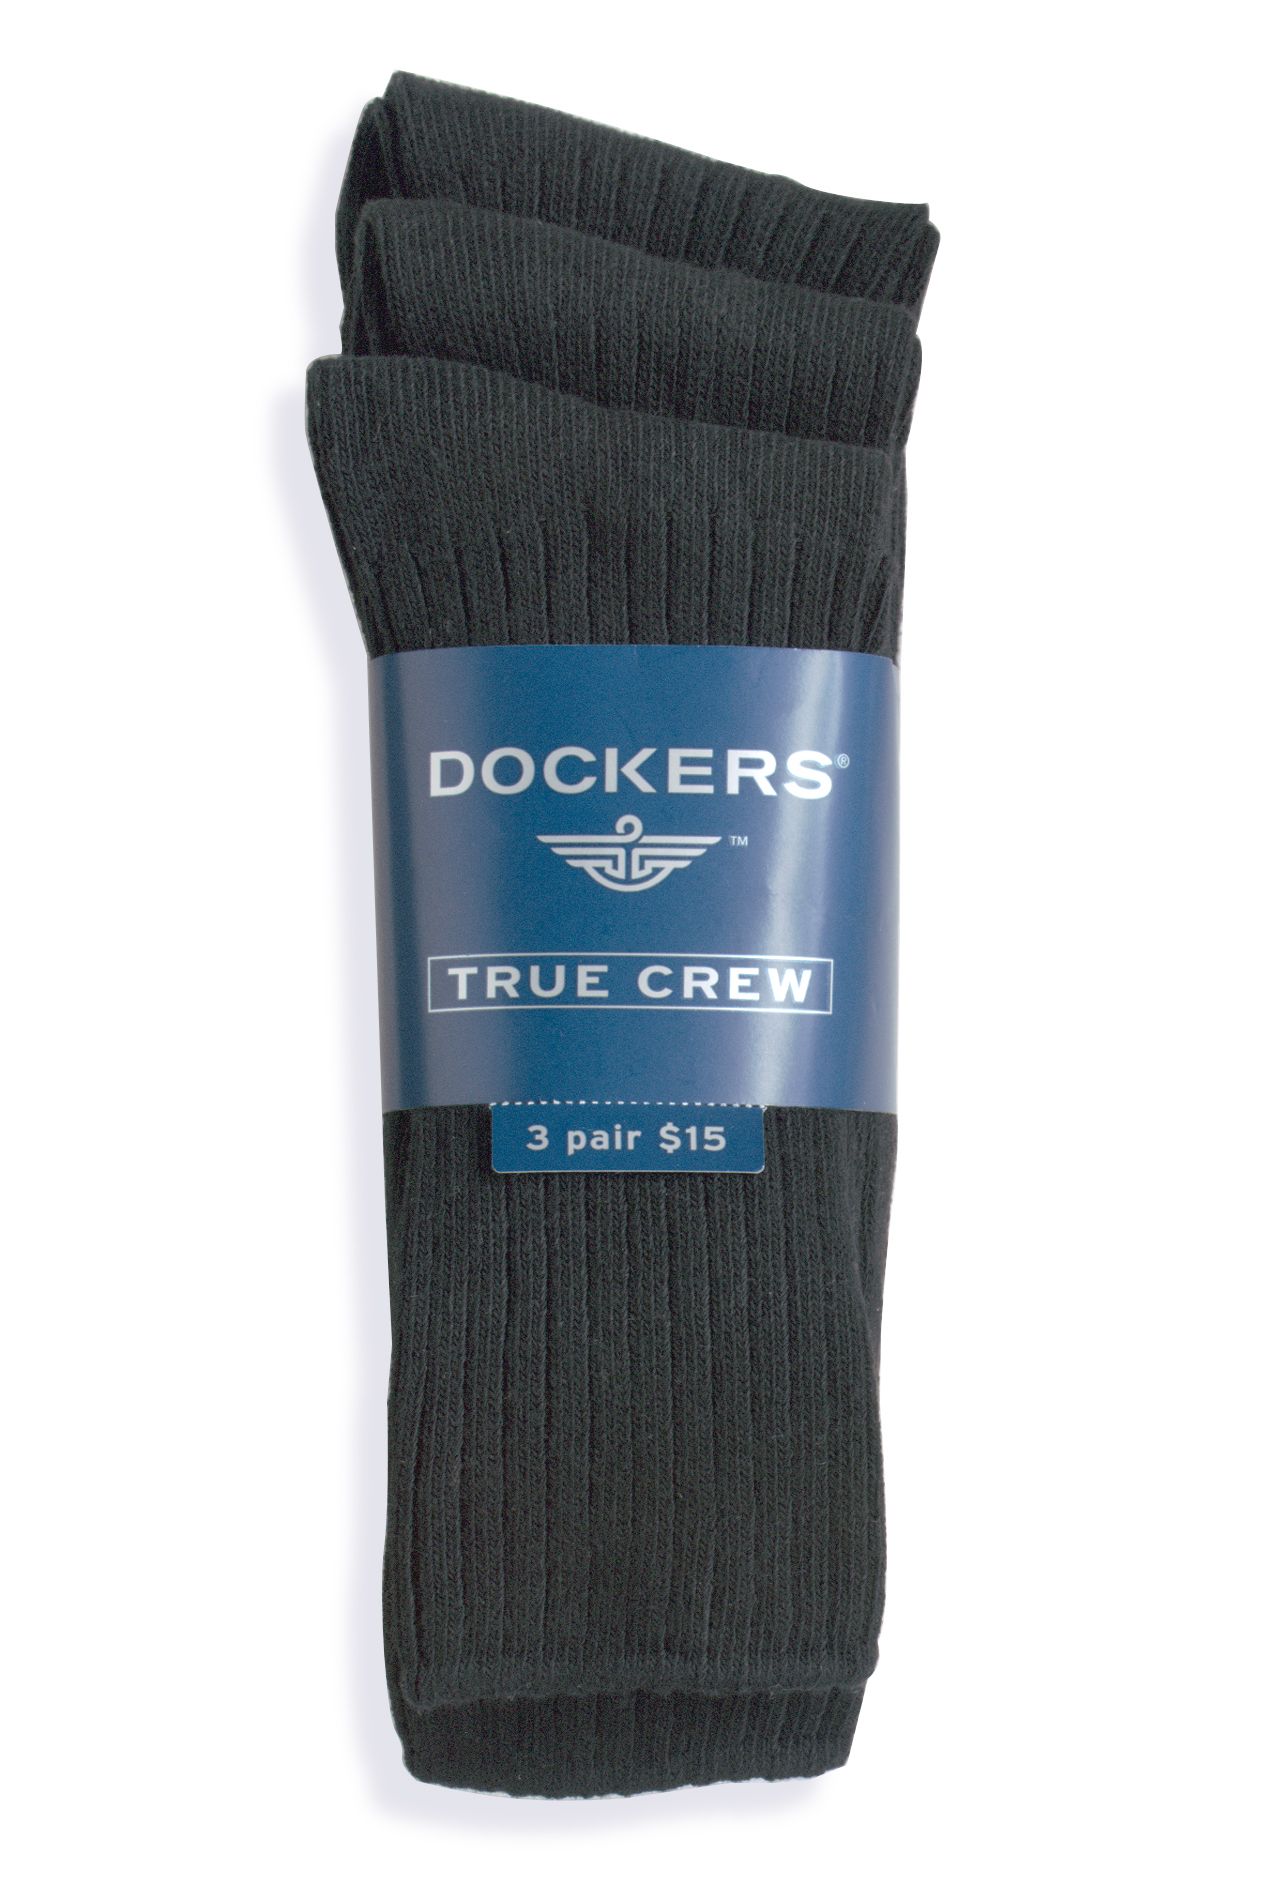 True Crew Socks - 3 Pair Pack